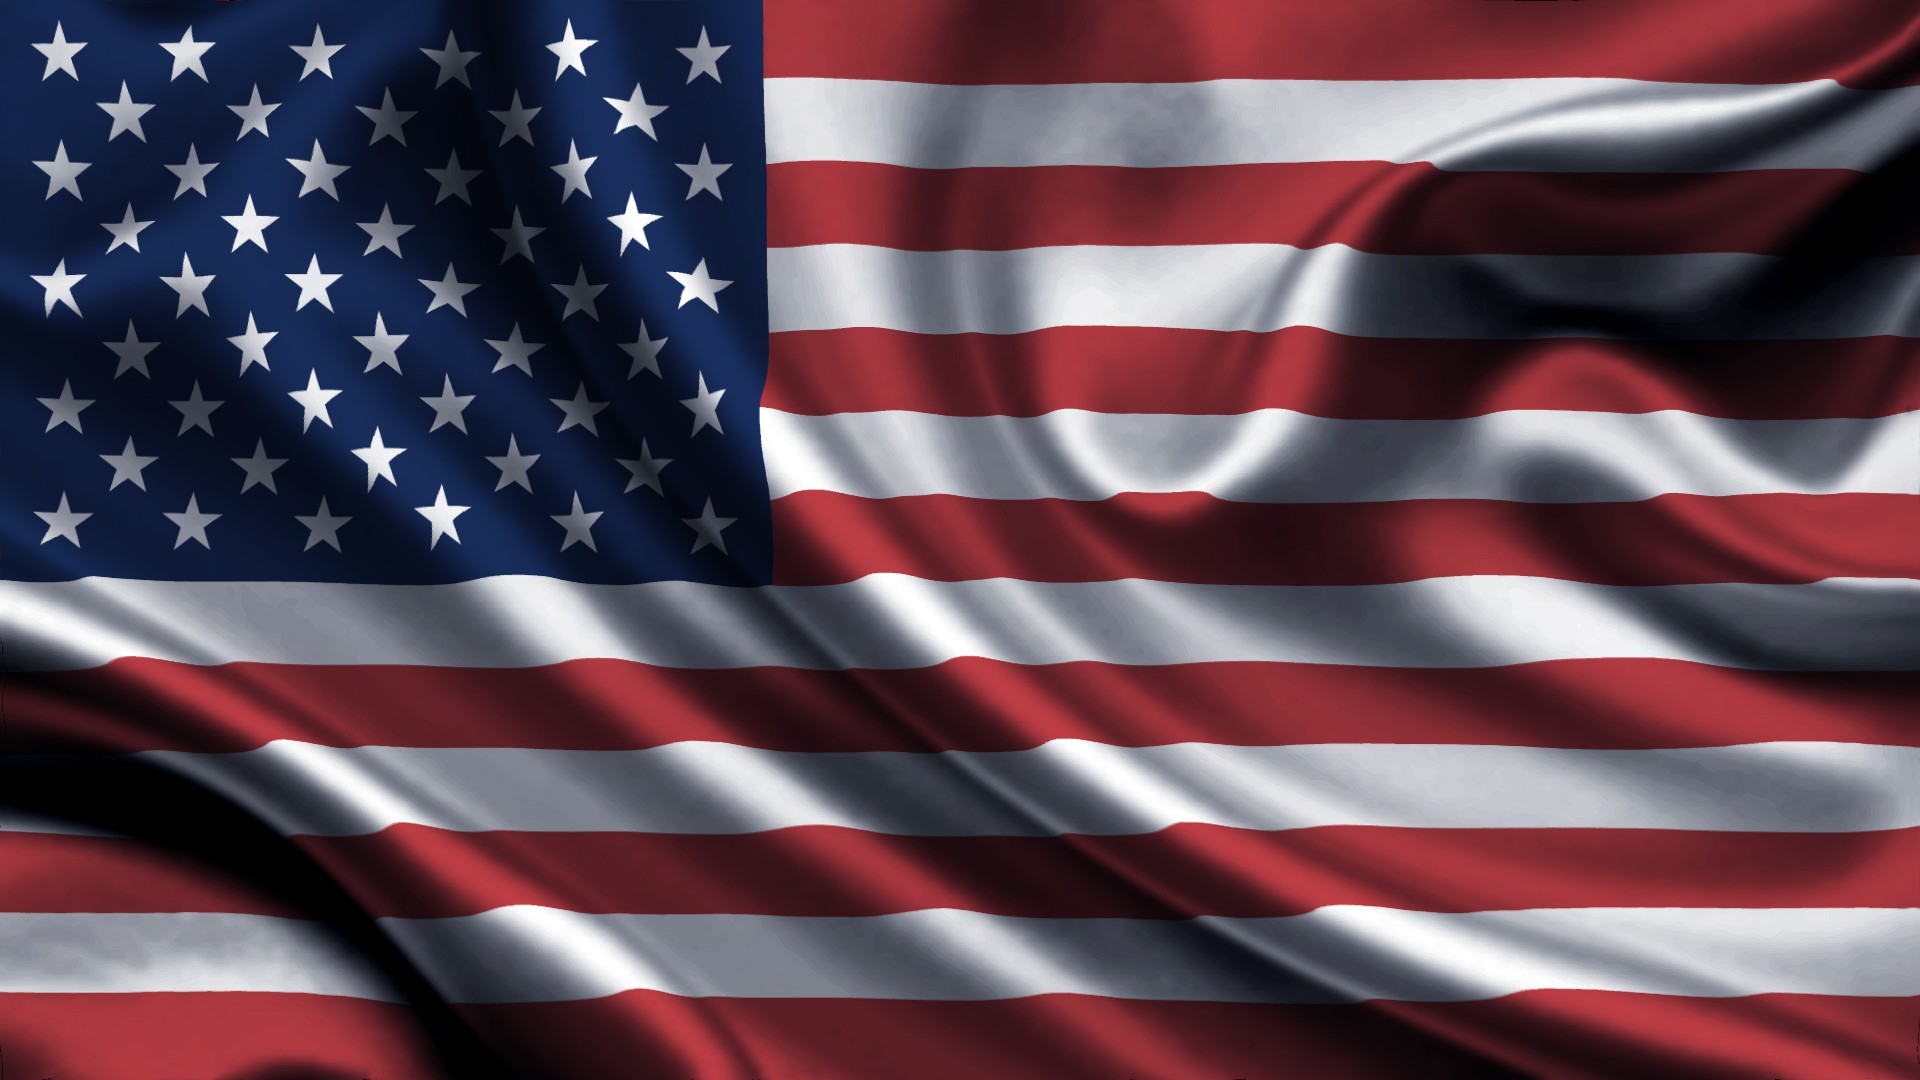 General 1920x1080 USA flag American flag digital art